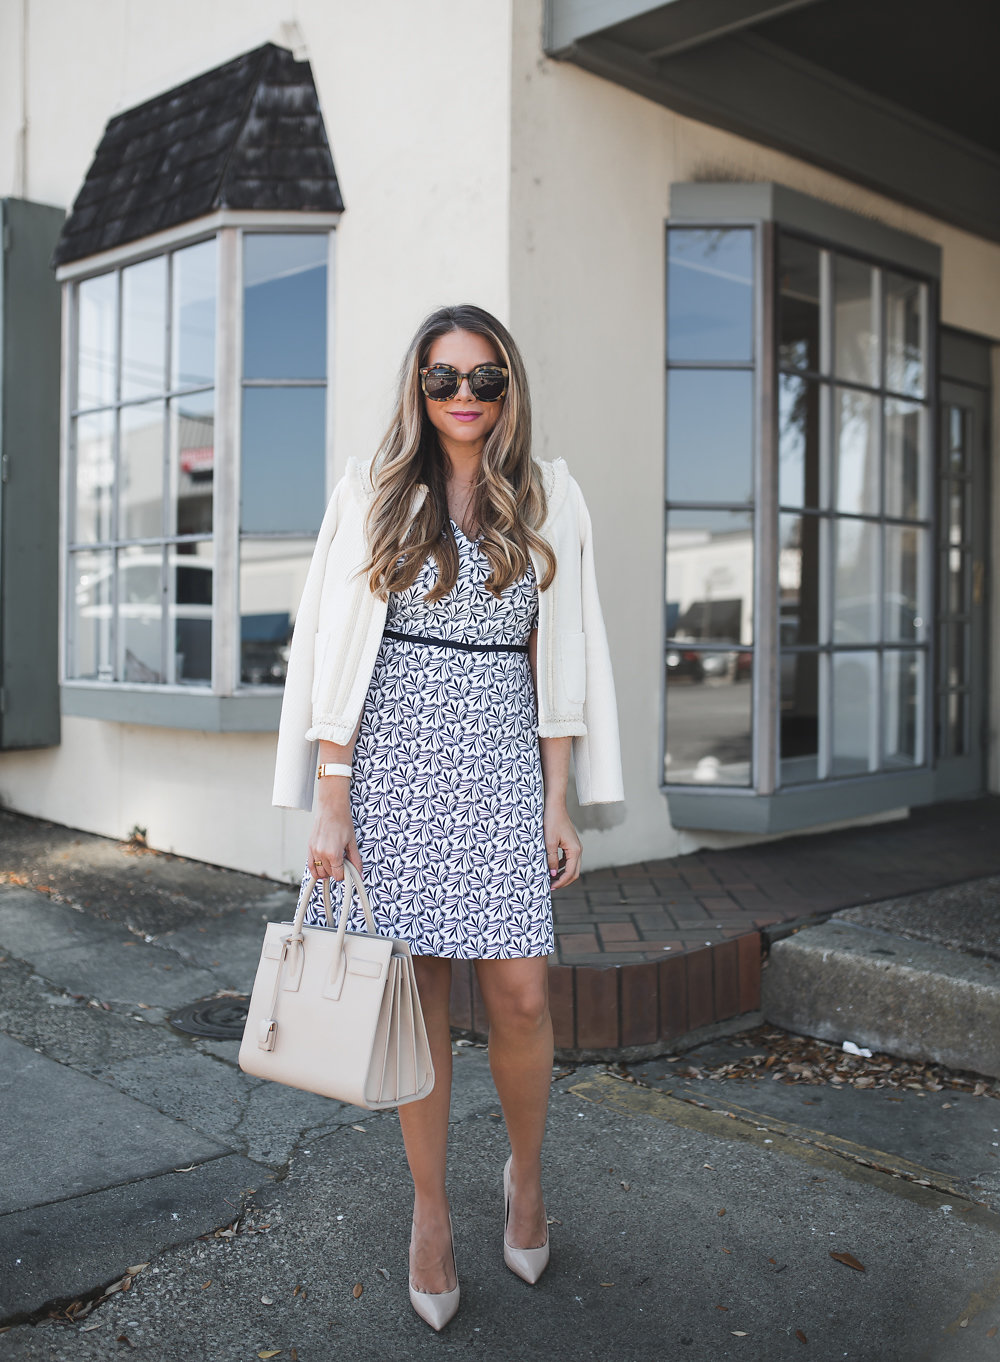 Blue and White Easter Dress | The Teacher Diva: a Dallas Fashion Blog ...